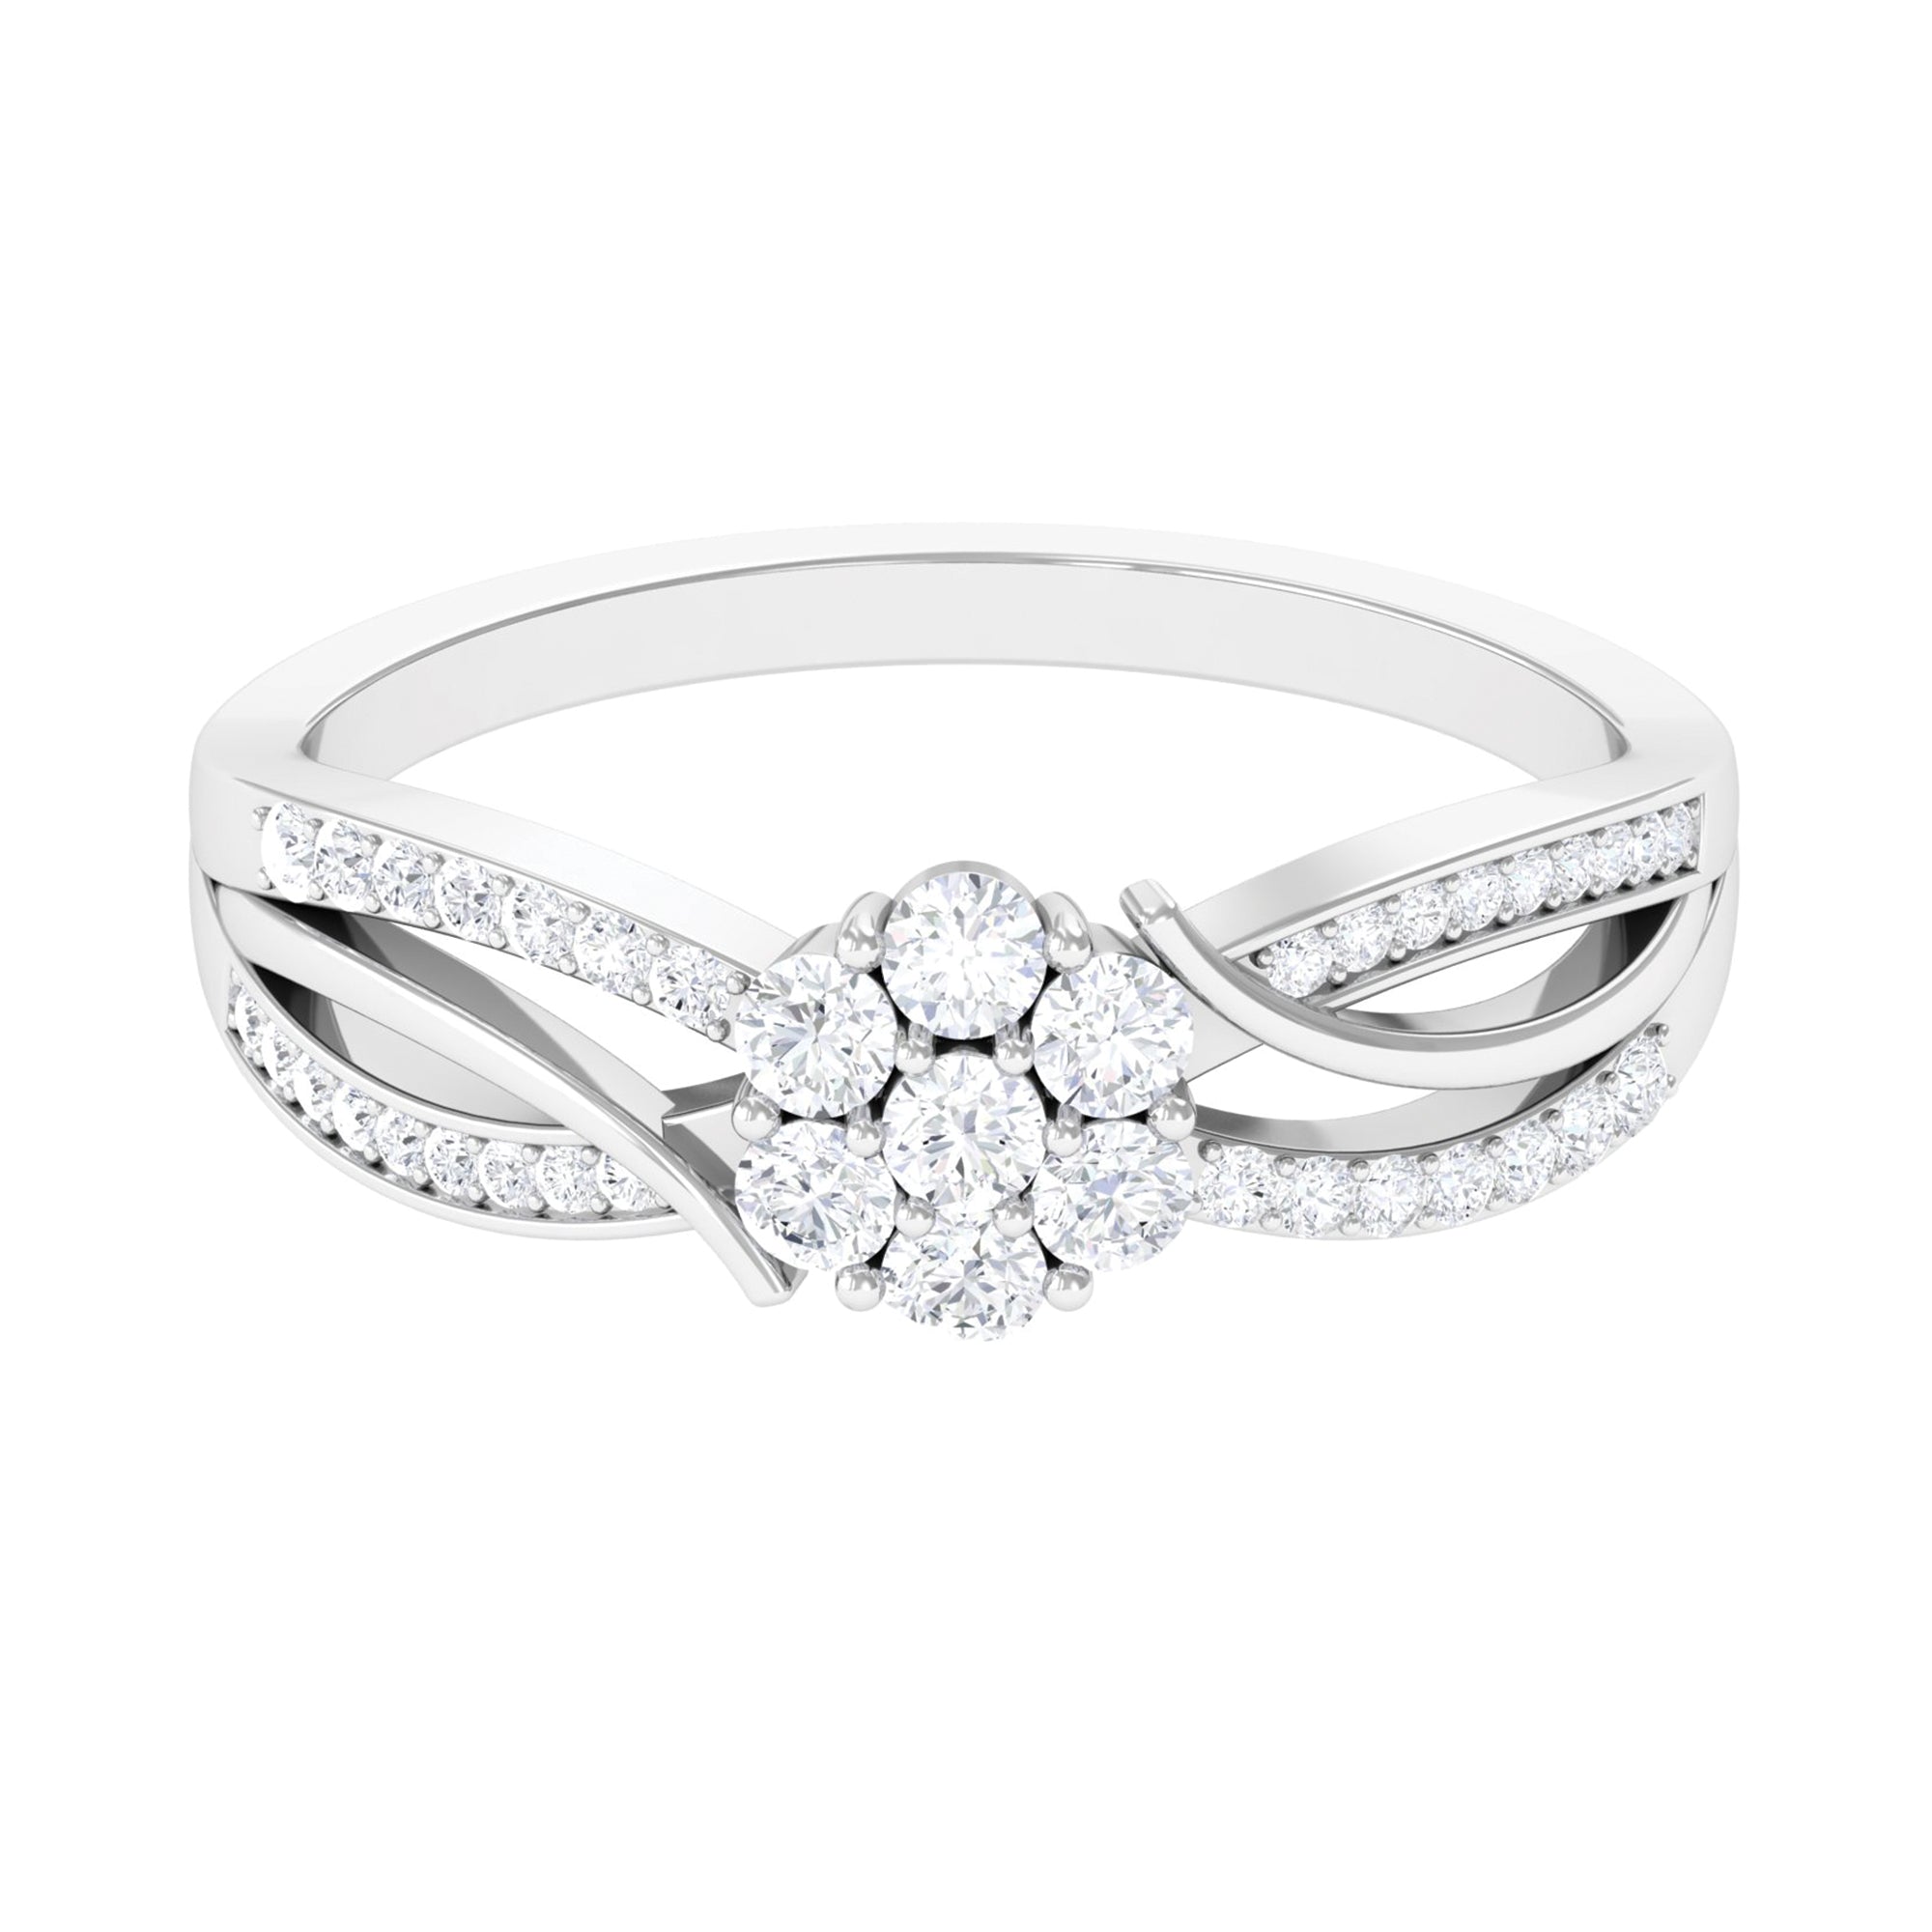 Rosec Jewels-Certified Moissanite Flower Engagement Ring in Infinity Shank